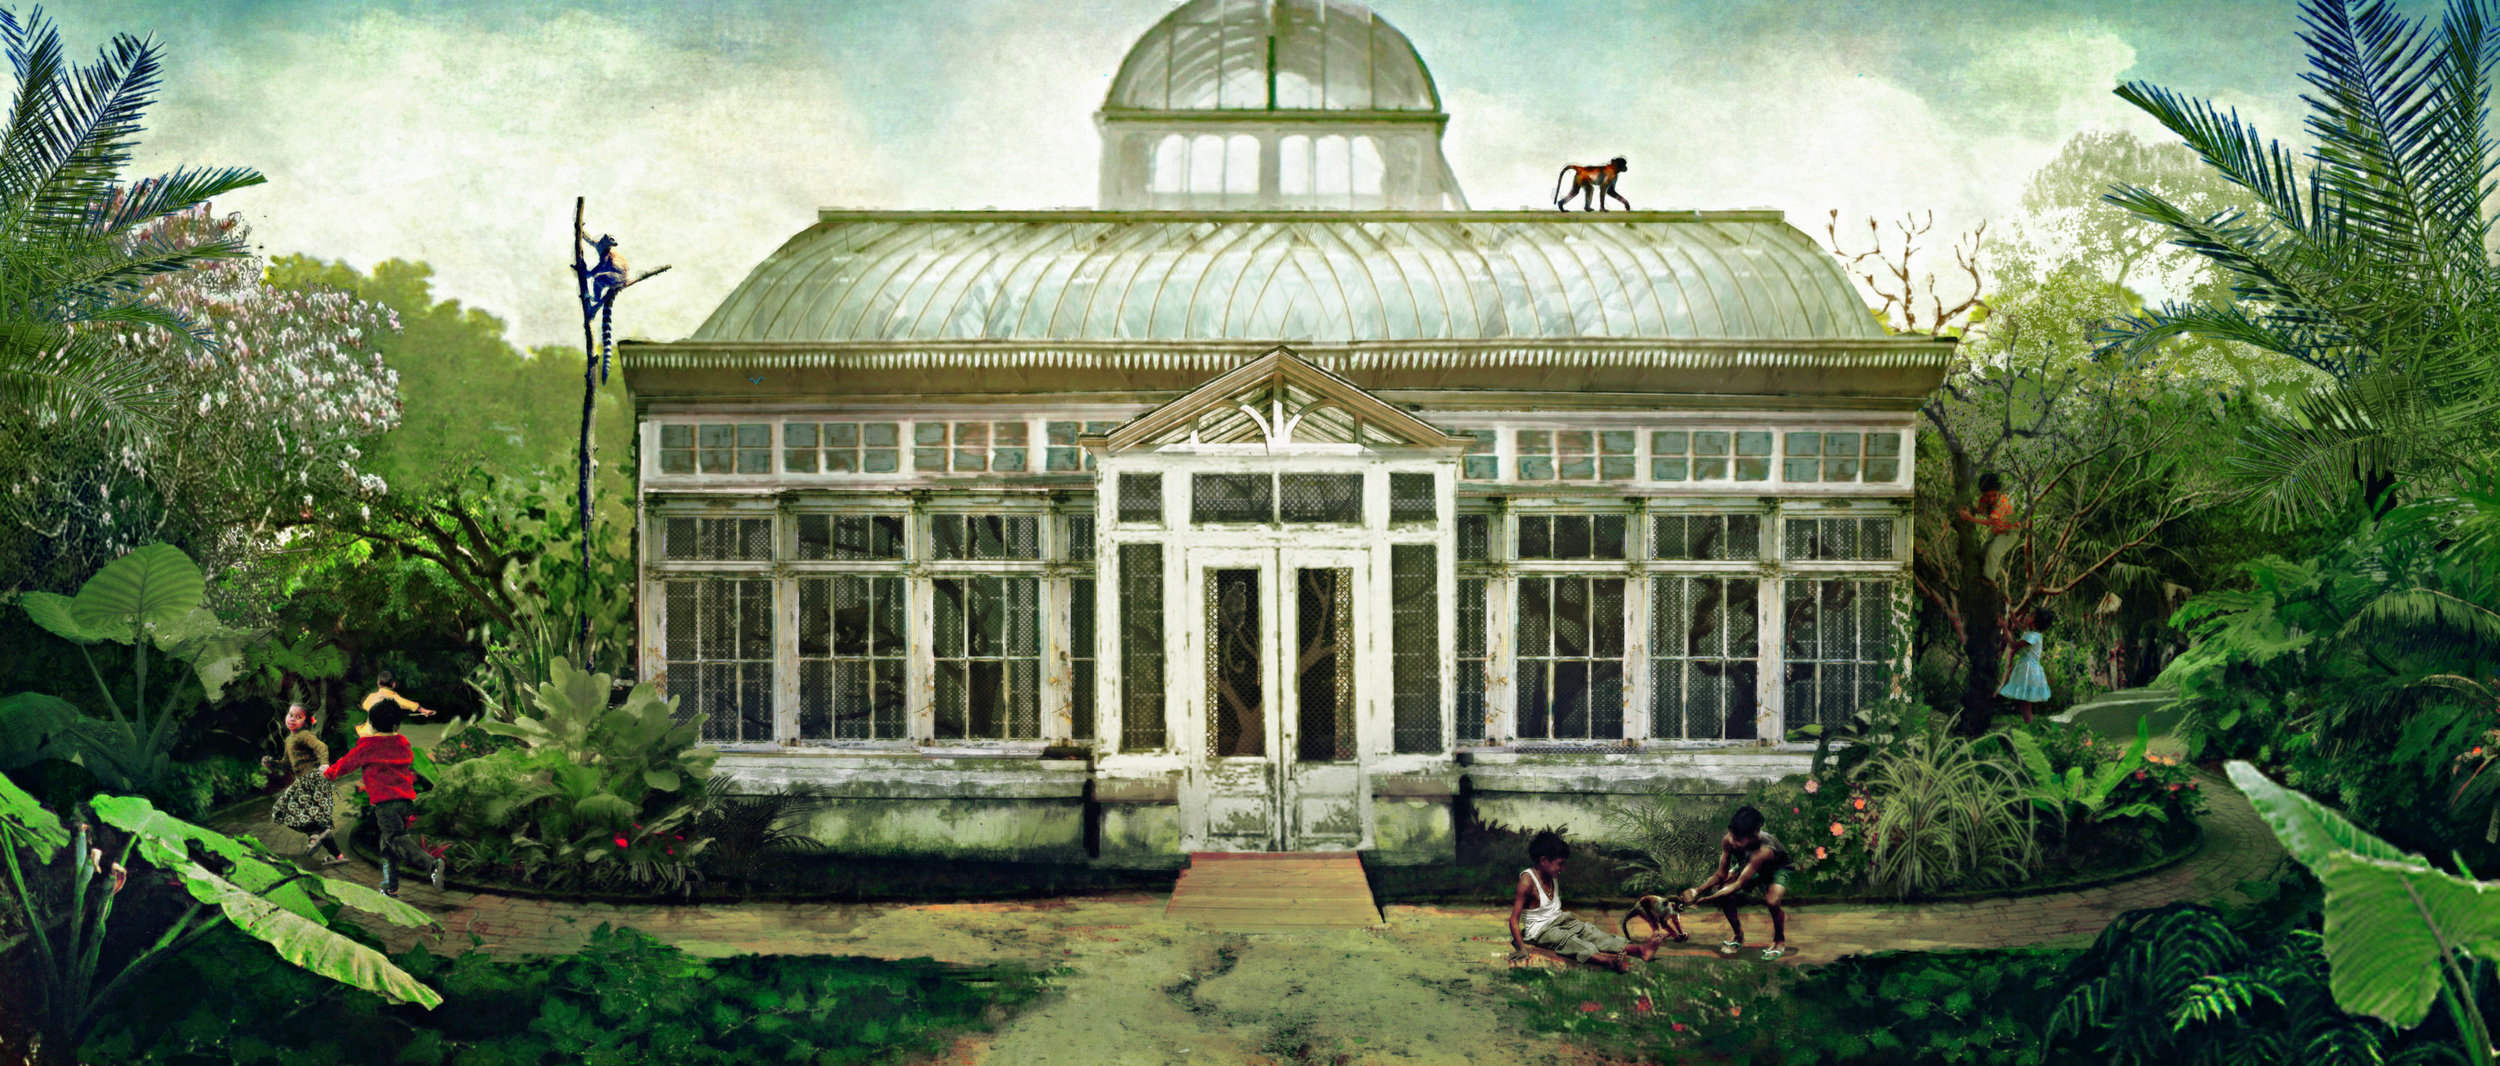 Illustration: Monkey Exhibit in Greenhouse (not filmed)